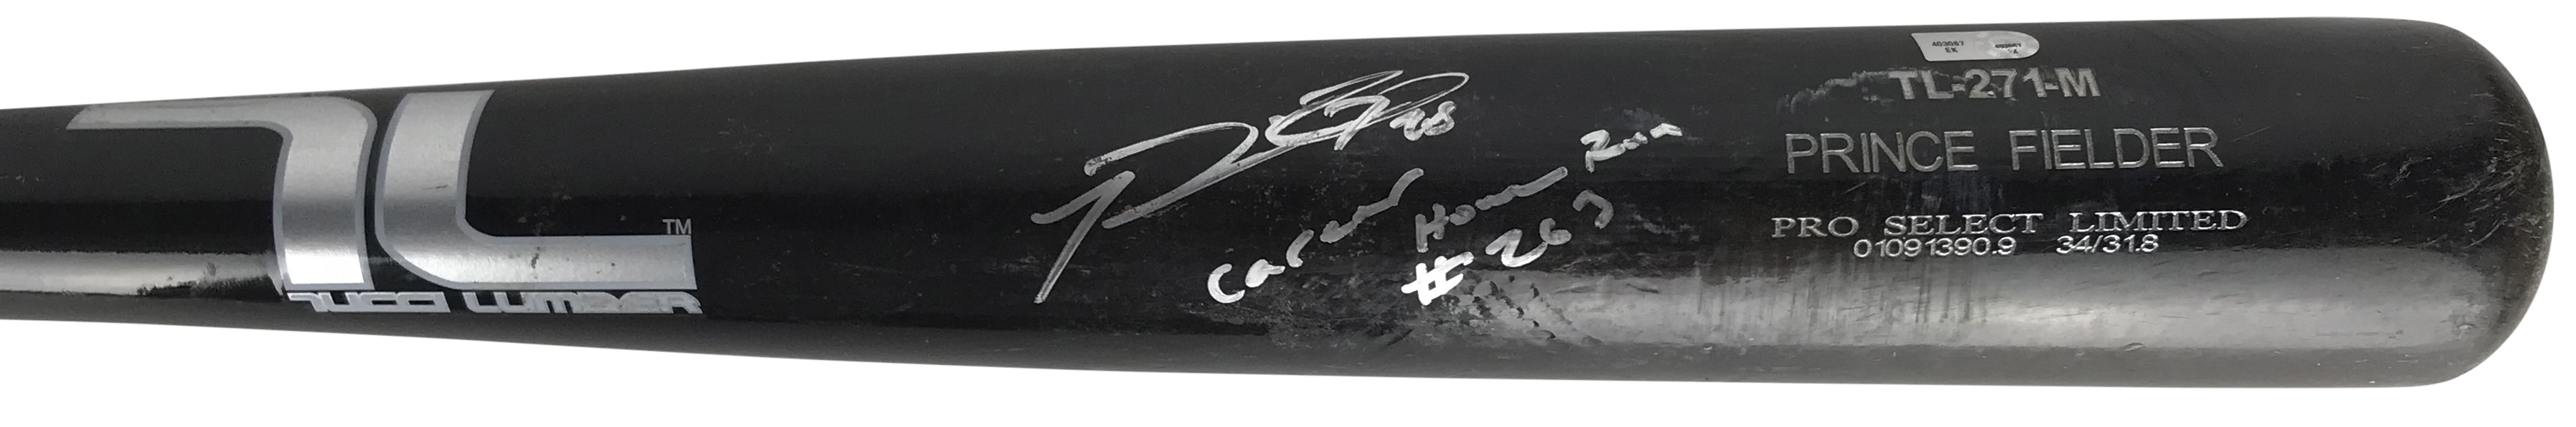 Prince Fielder Signed & Game Used 2013 TL-271M Tucci Home Run Baseball Bat PSA/DNA GU 9 & MLB!